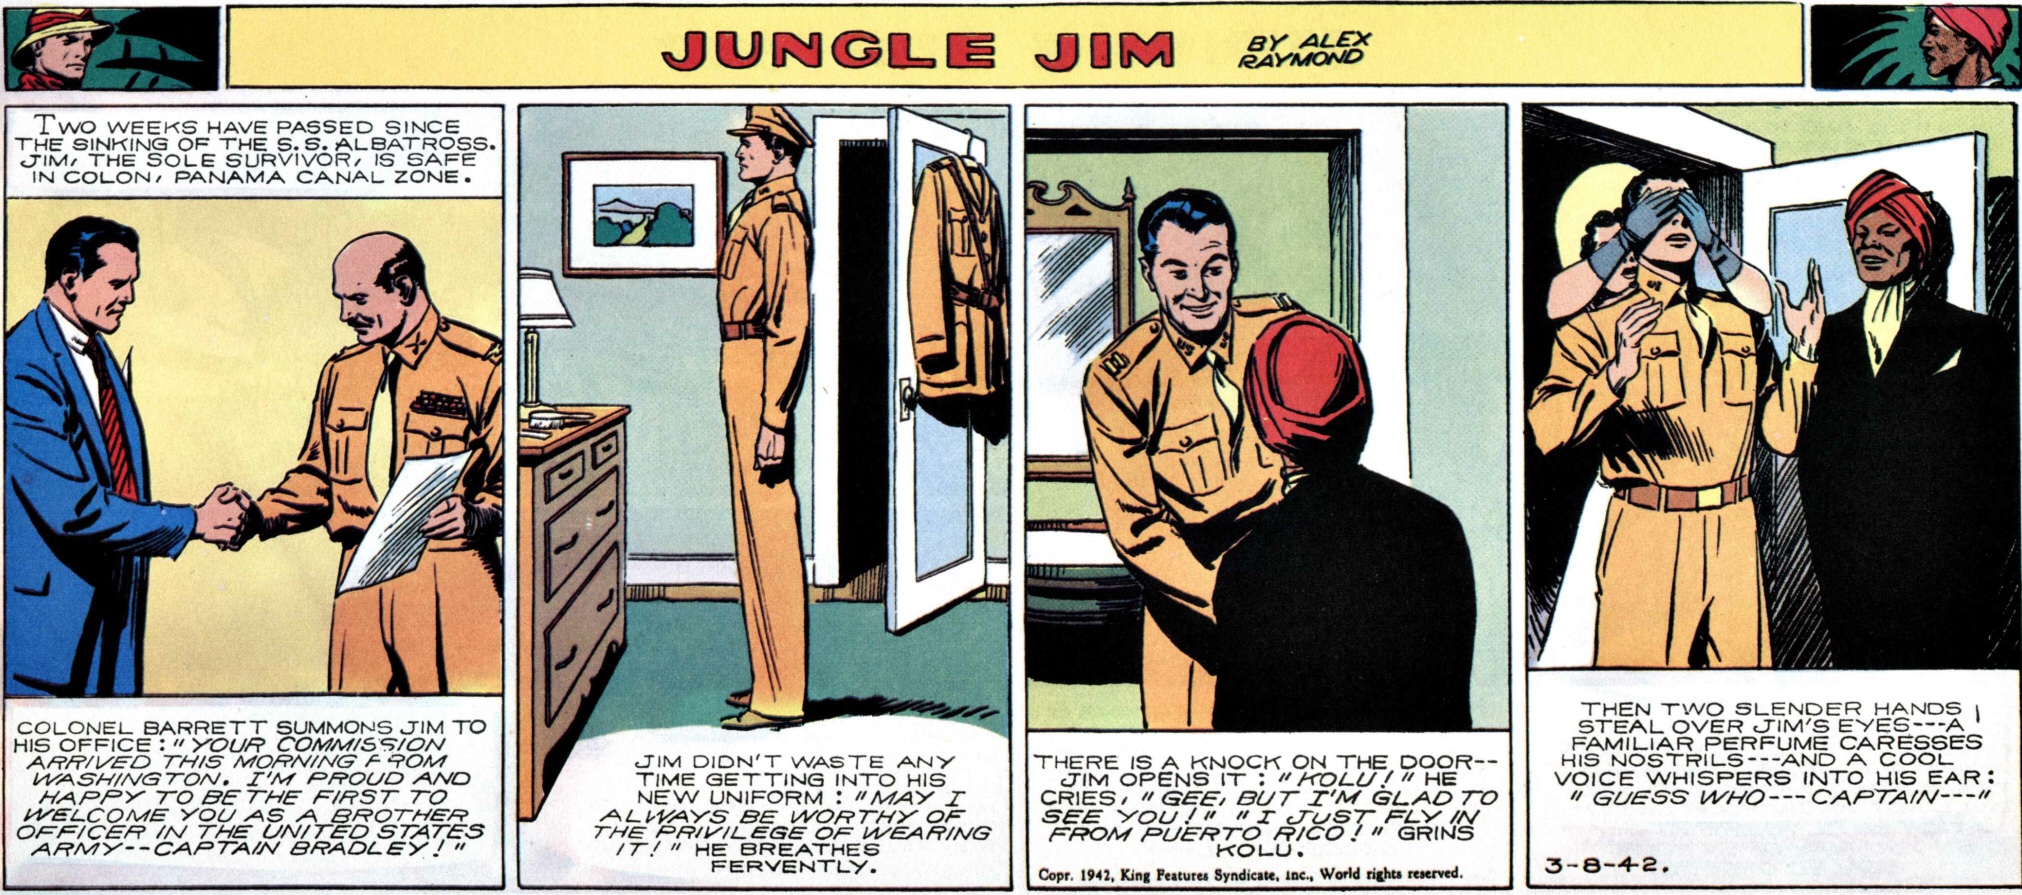 Den 8 mars 1942 blir Jungle Jim kapten i armén